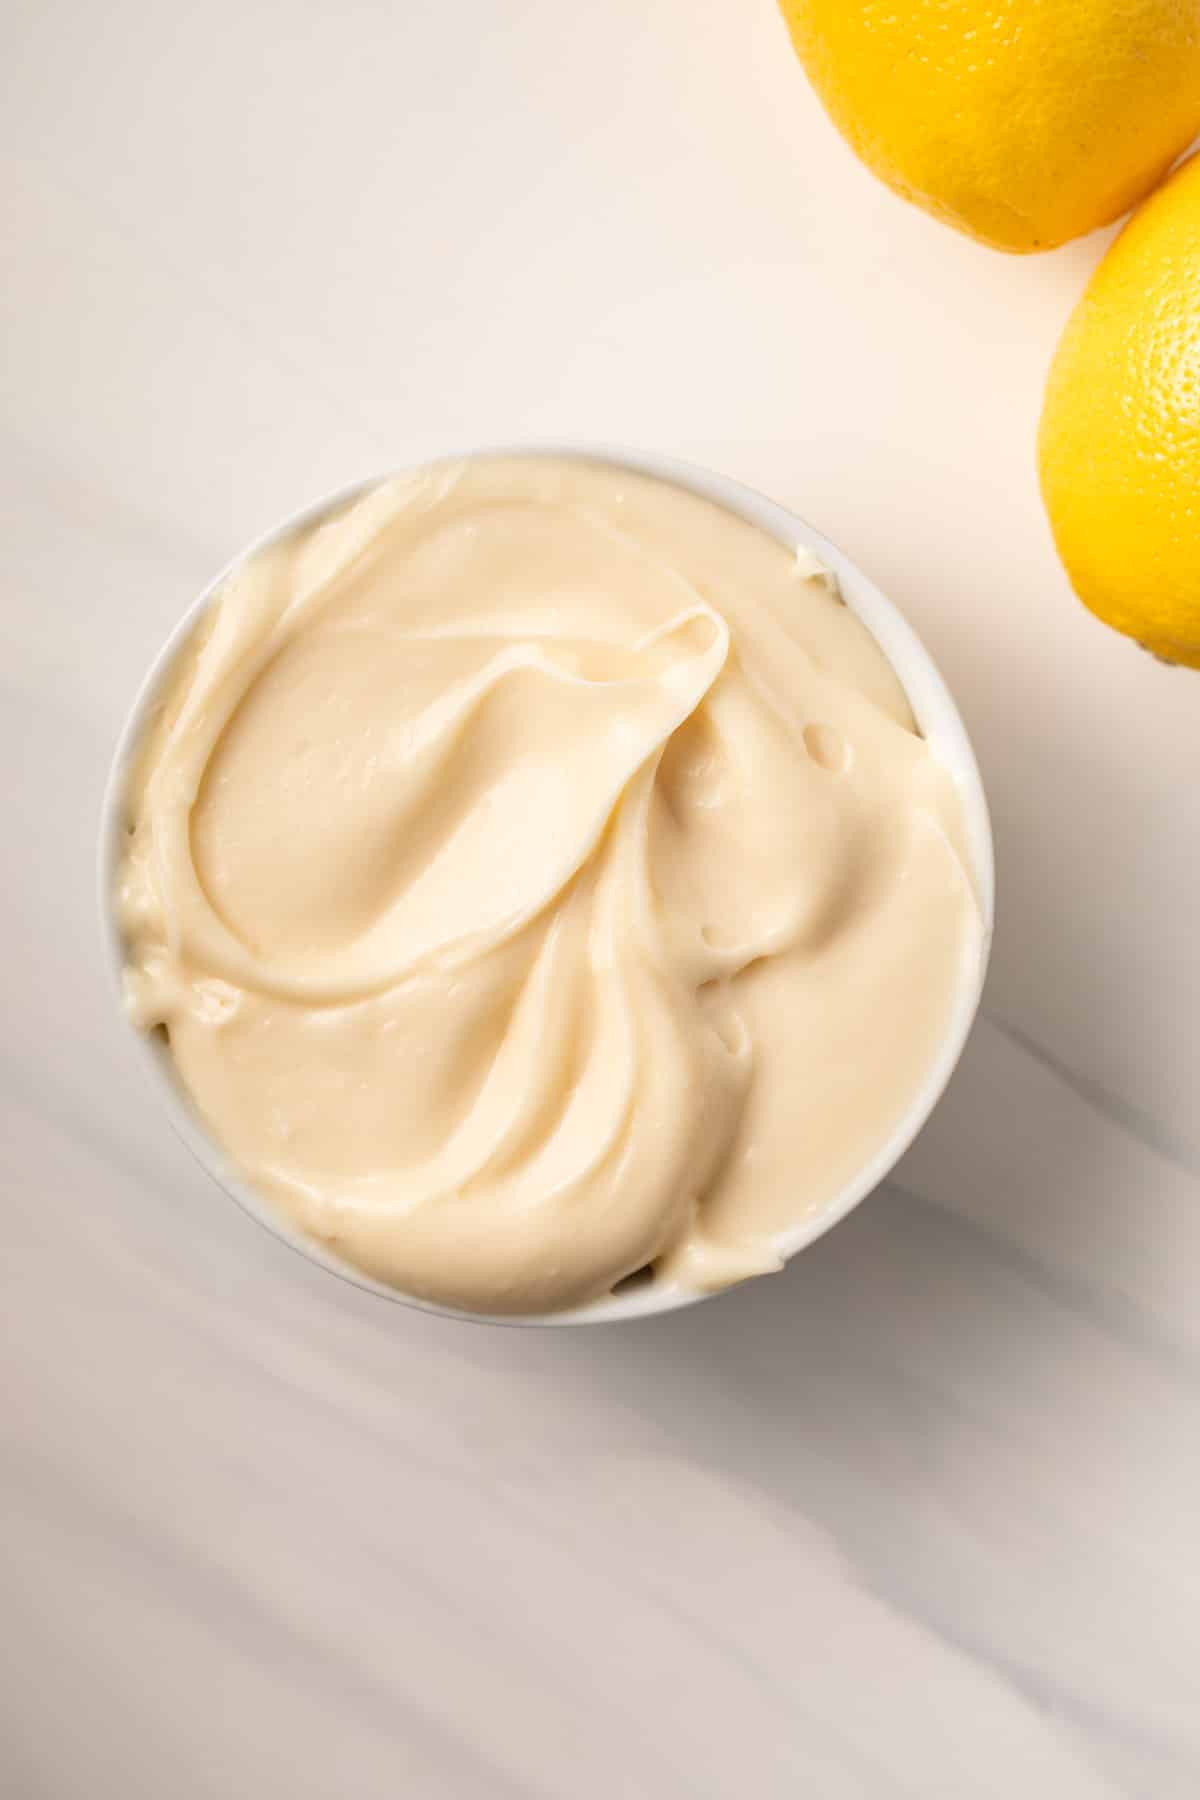 Lemon cream cheese frosting in white bowl.